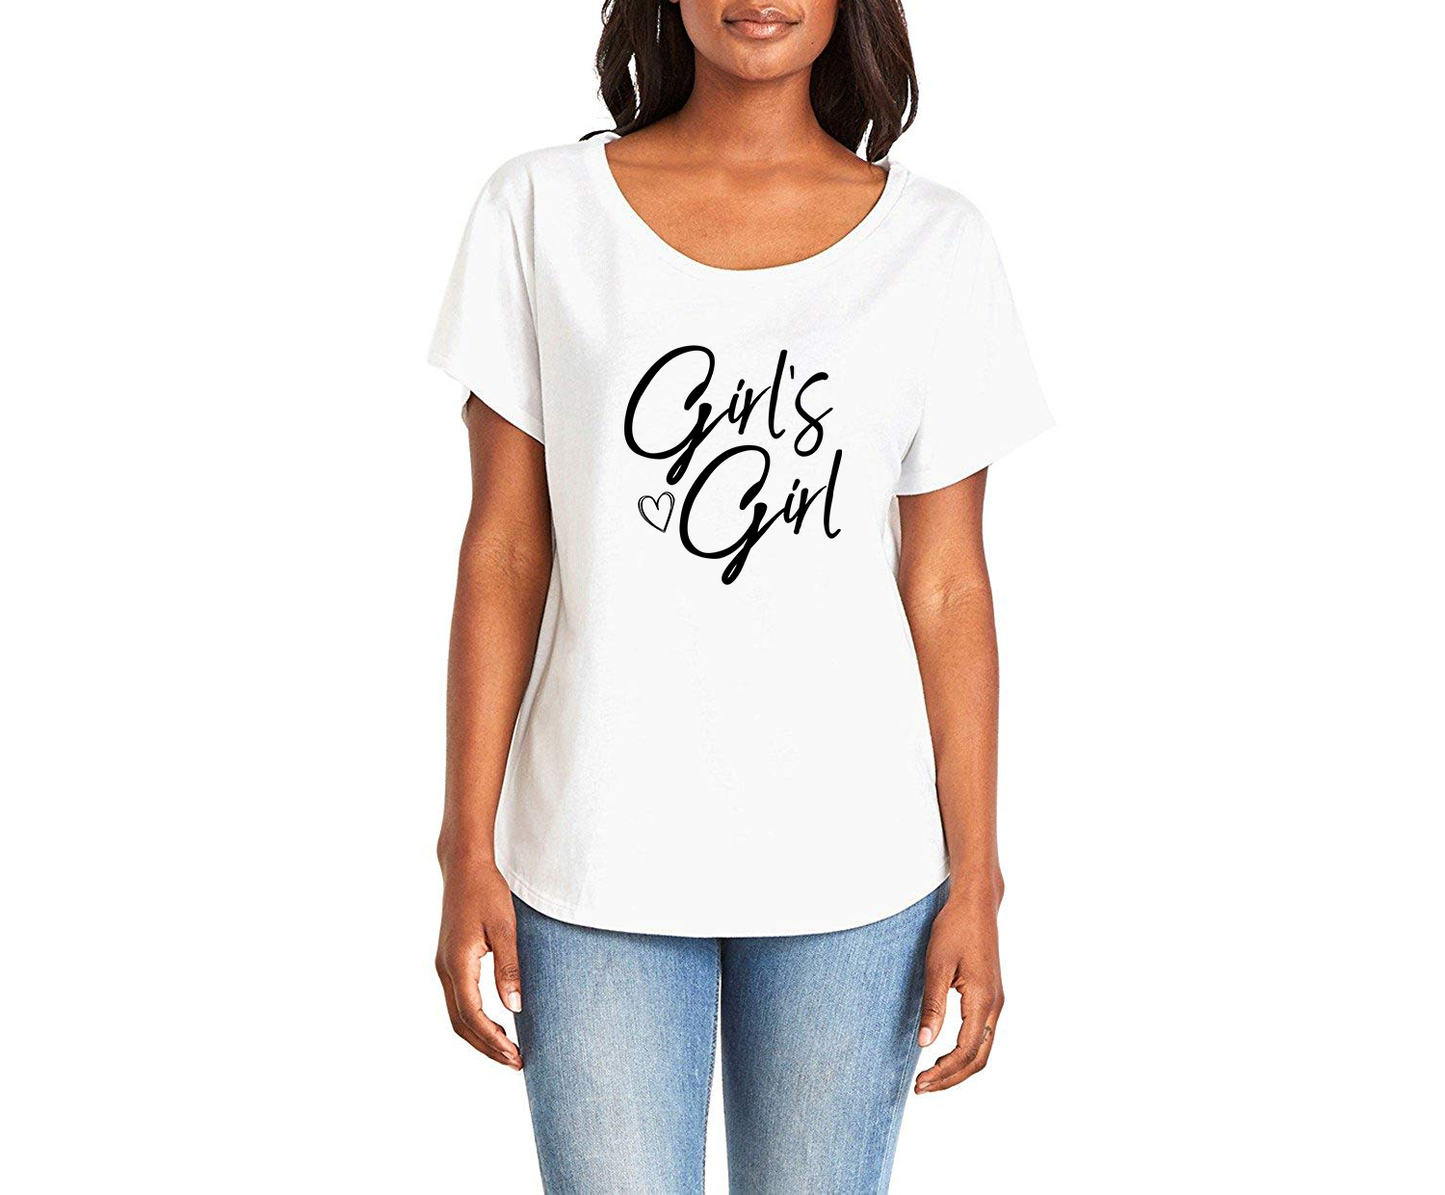 Girl's Girl Ladies Tee Shirt - In Grey & White